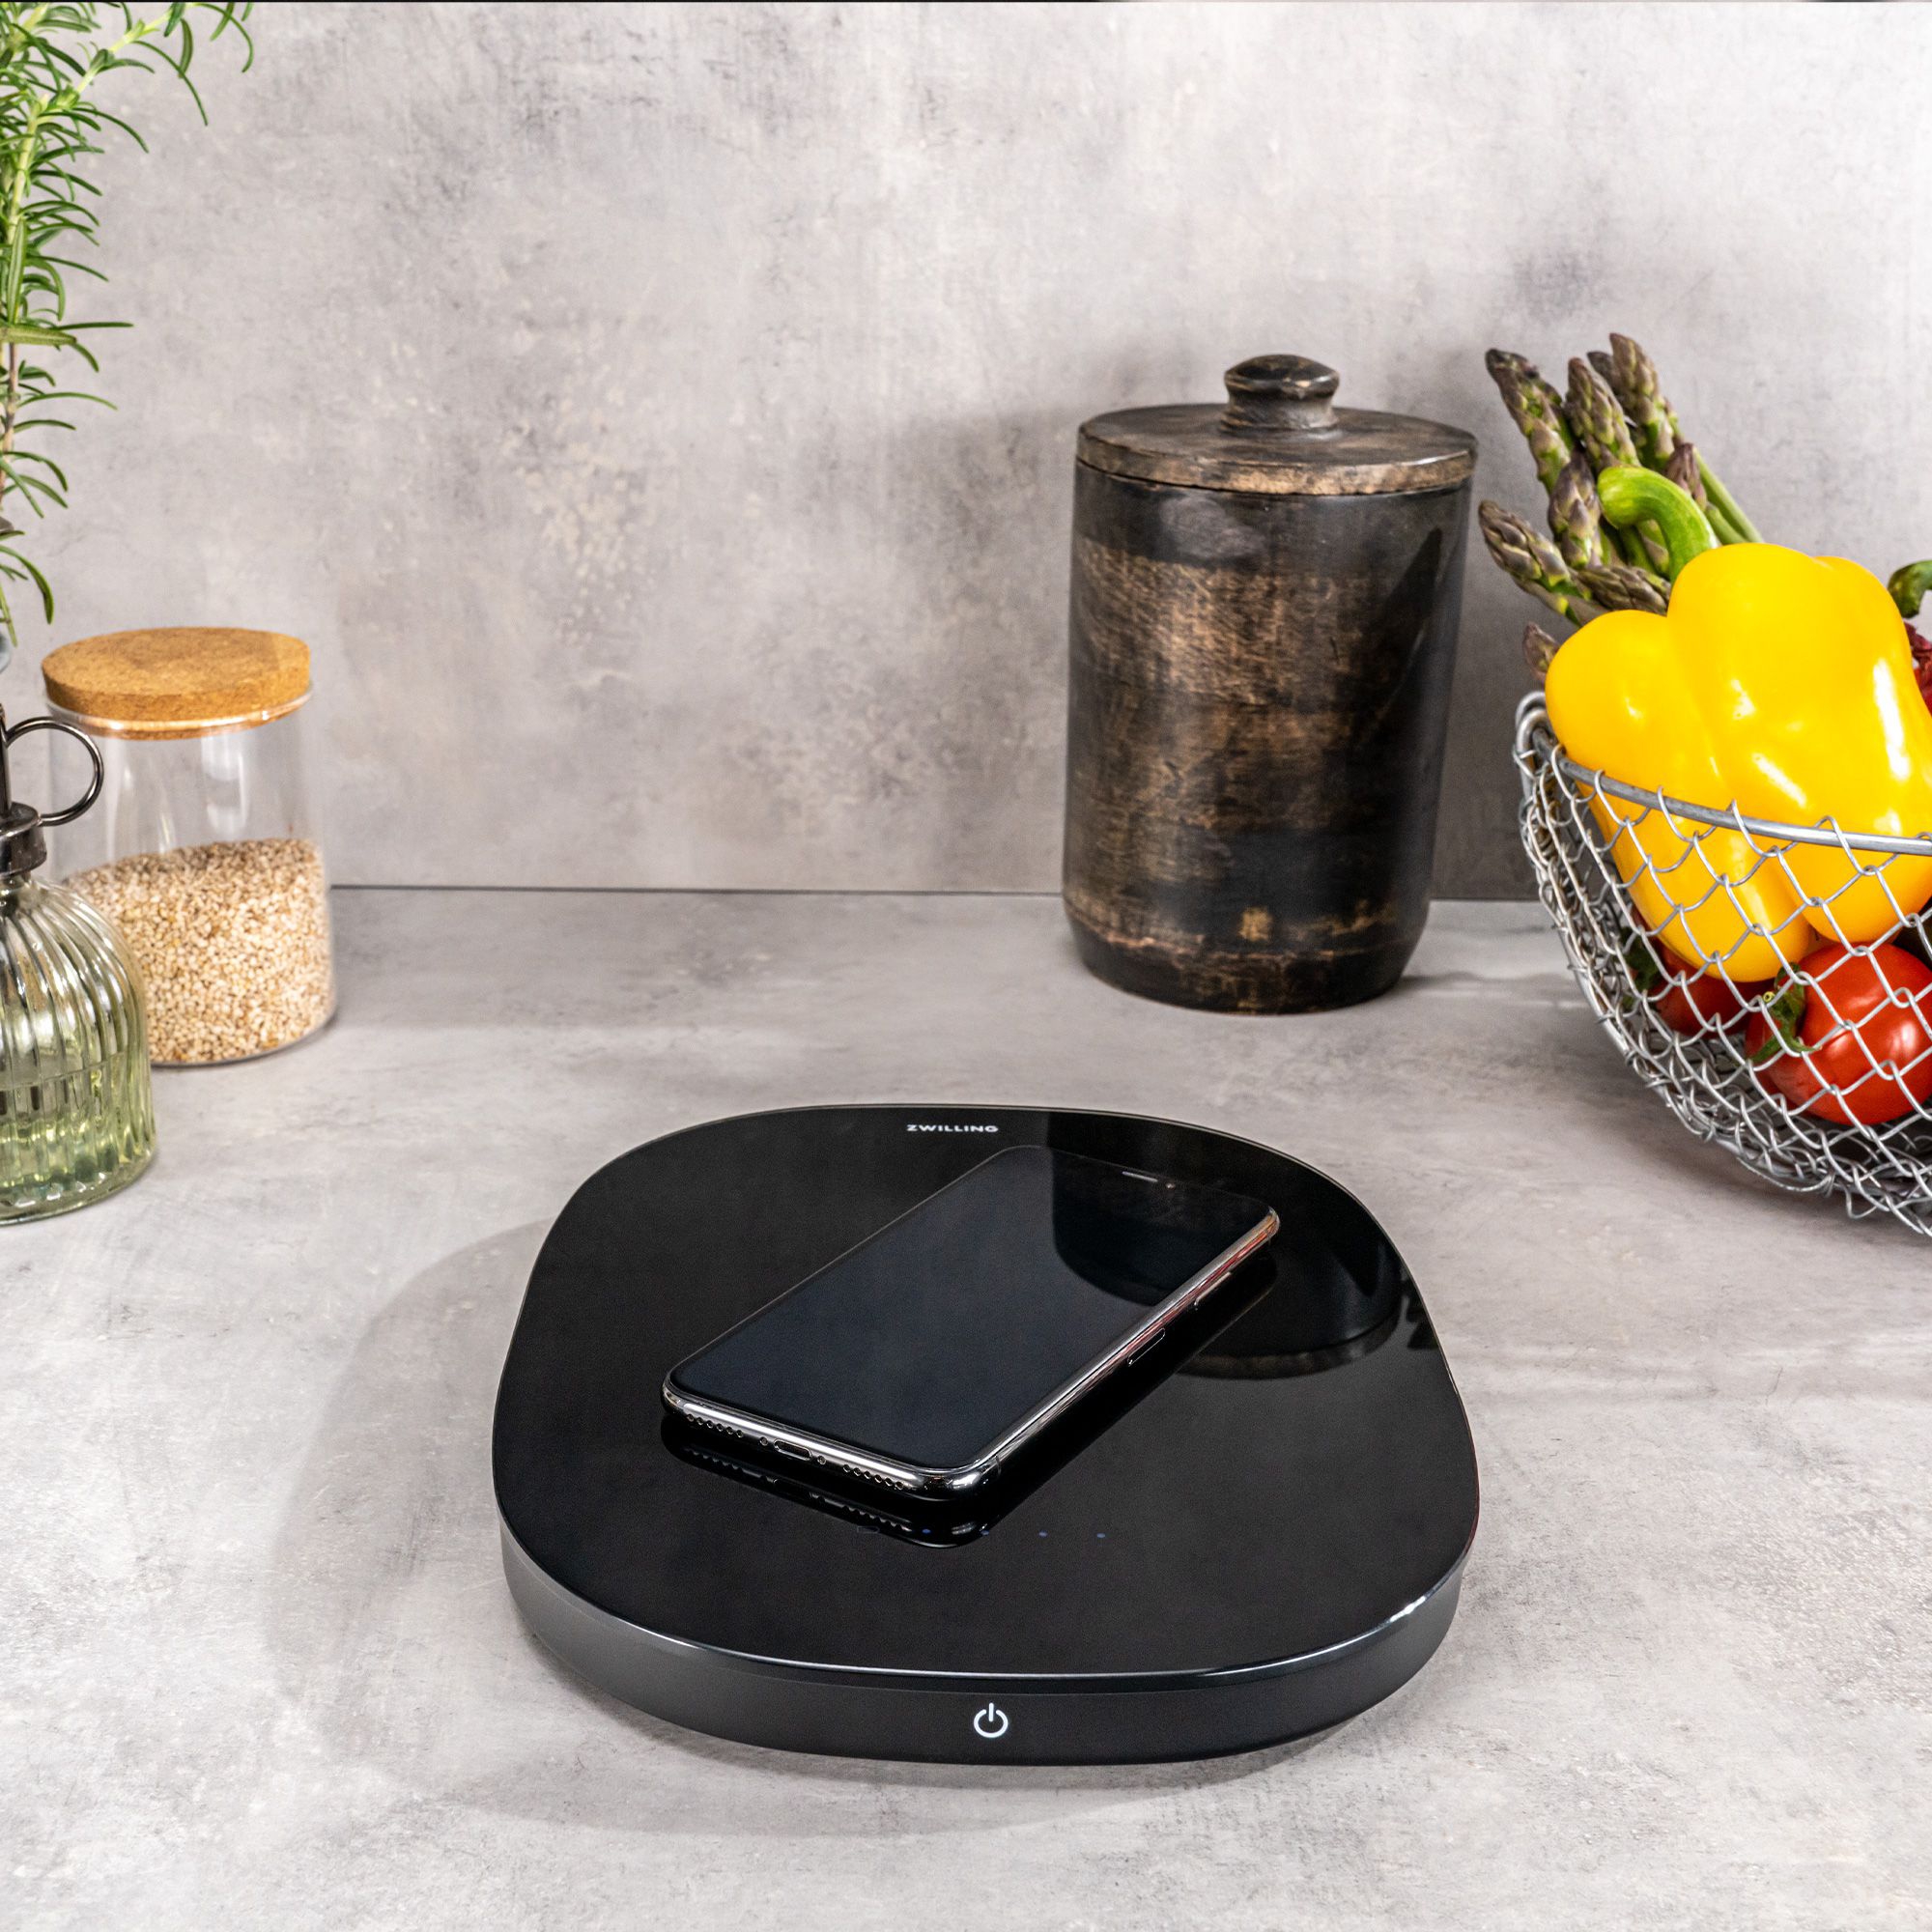 Zwilling - ENFINIGY Digital kitchen scale - black